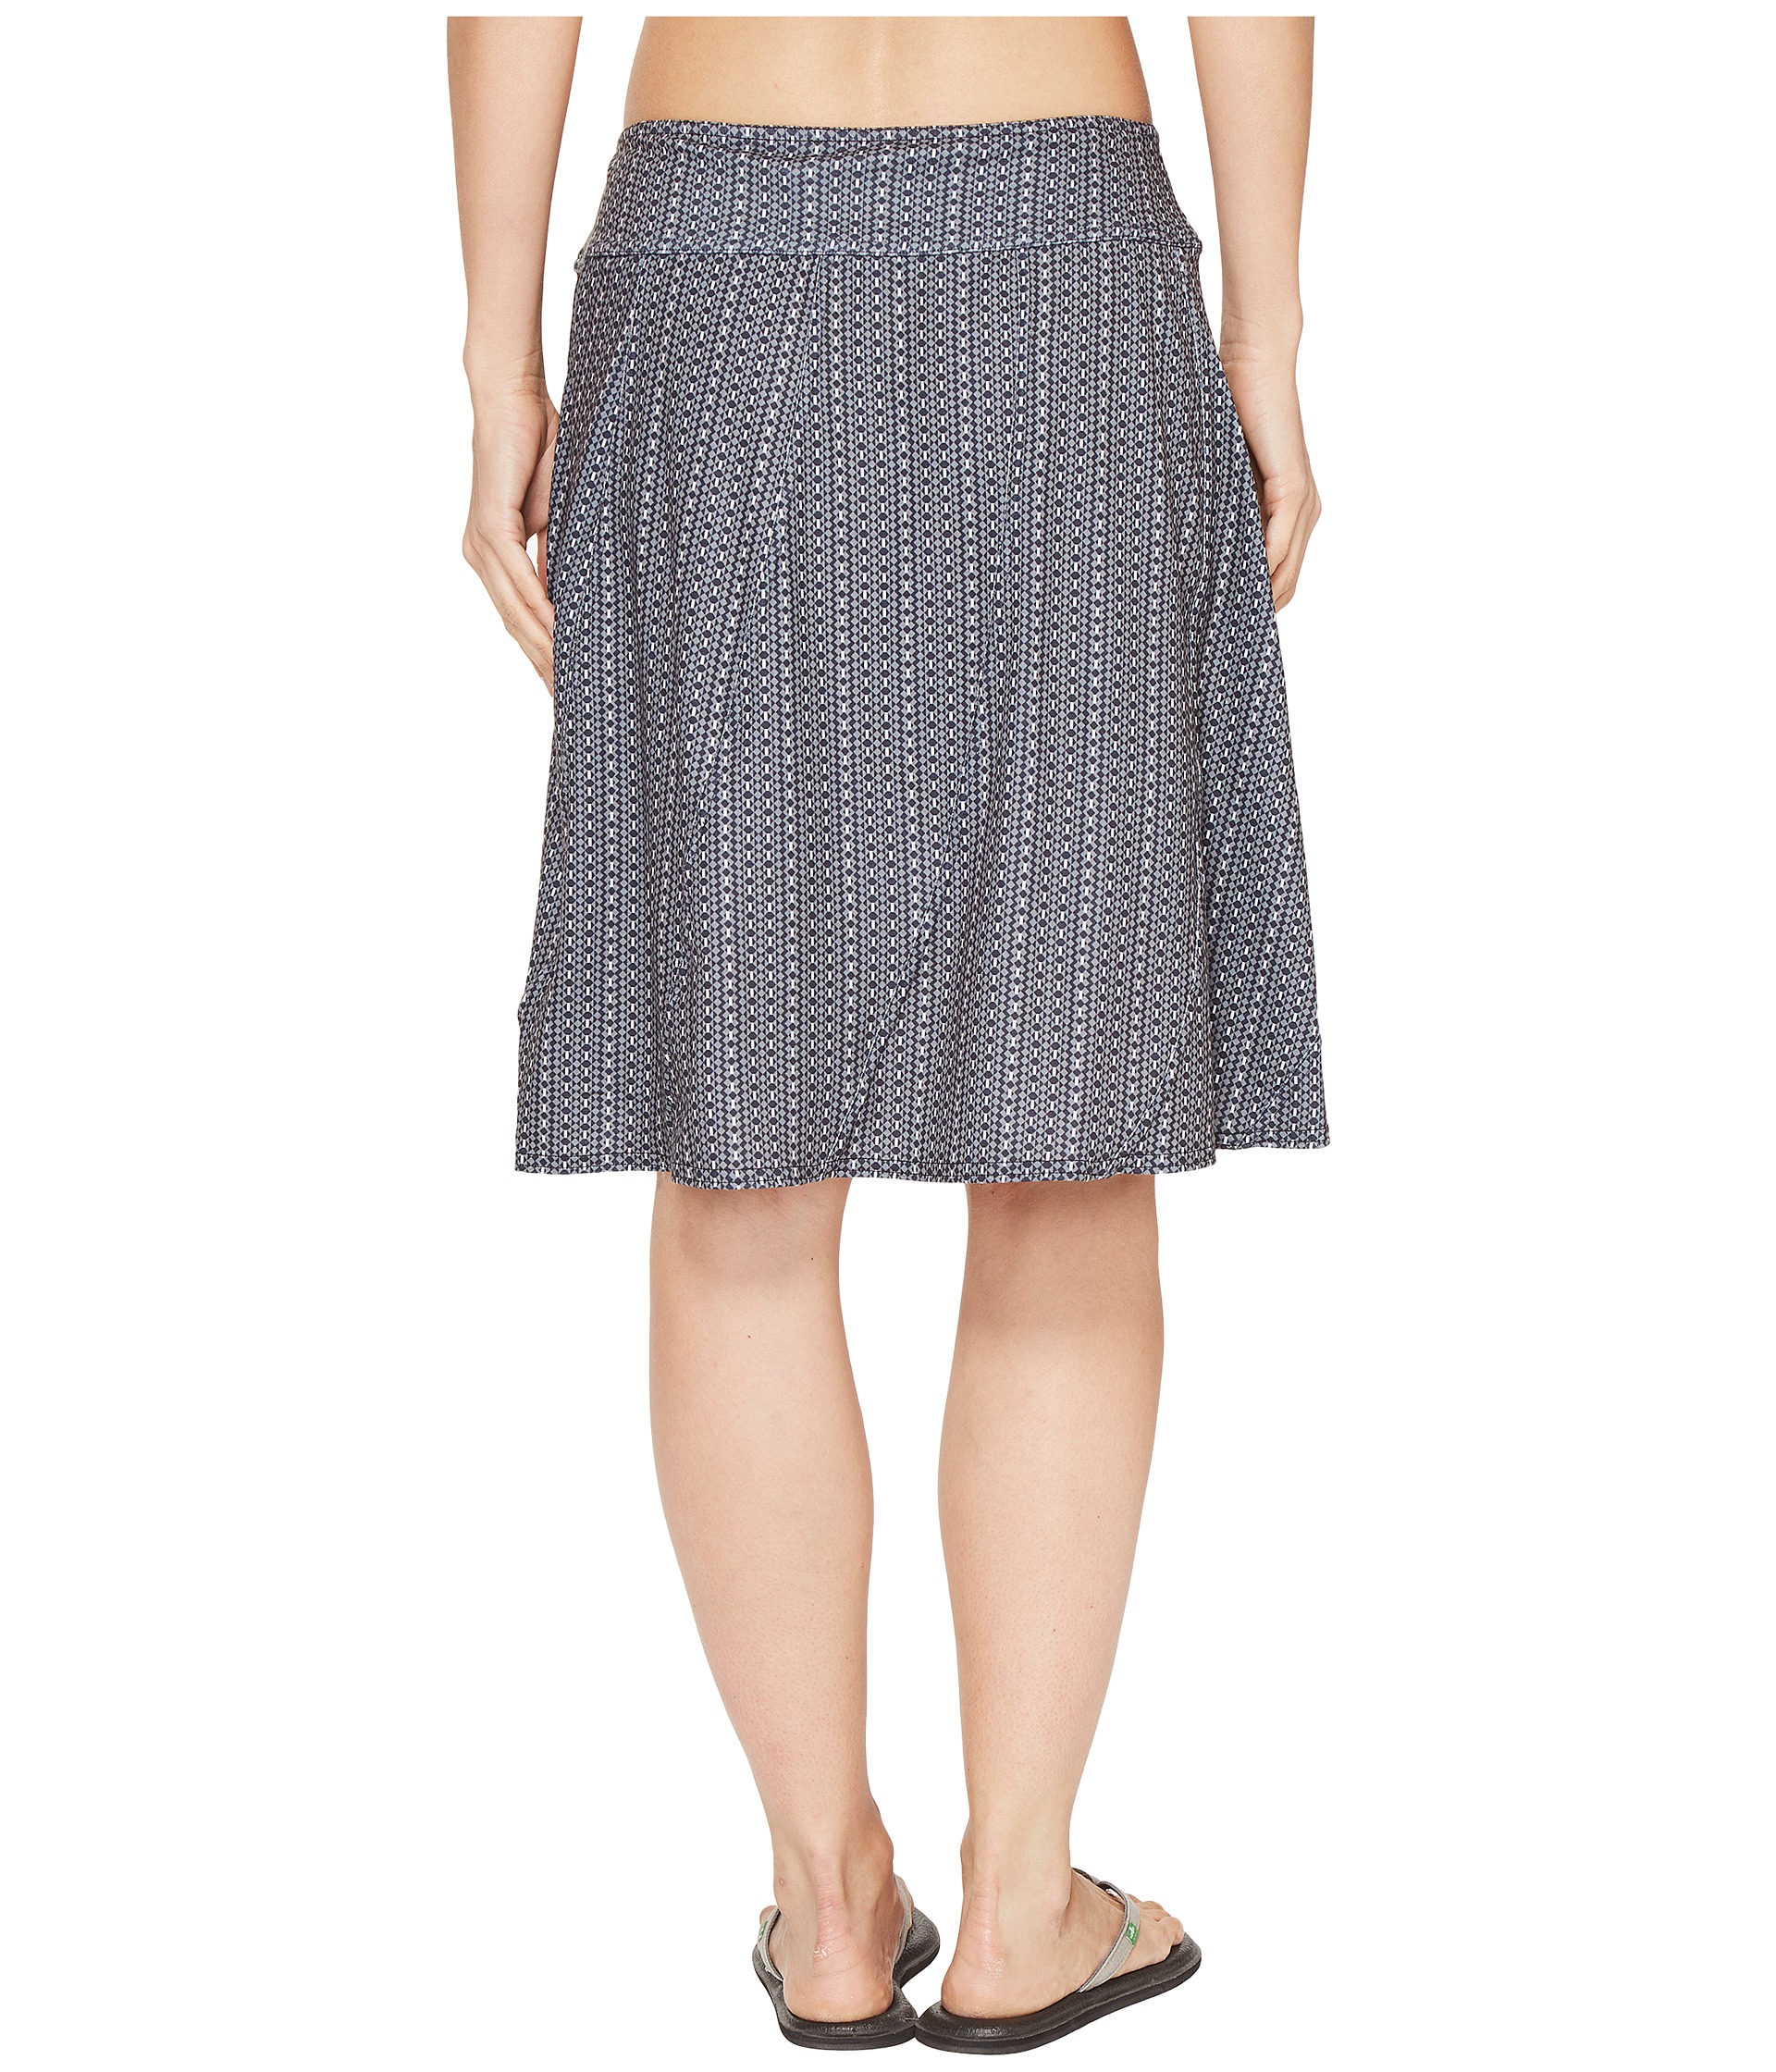 Prana Vendela Printed Skirt at Zappos.com